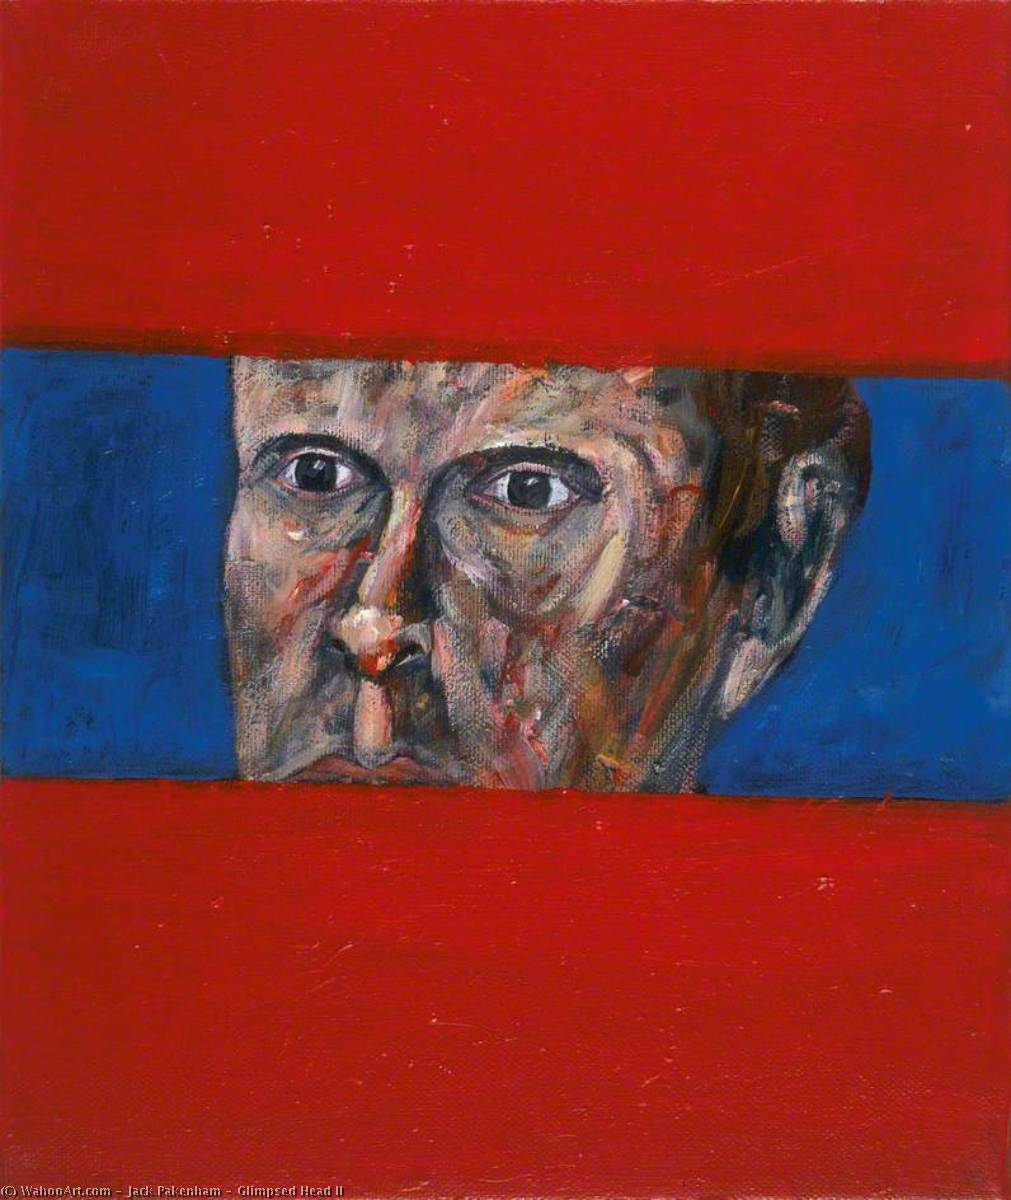 Glimpsed Head II, 2003 by Jack Pakenham Jack Pakenham | ArtsDot.com